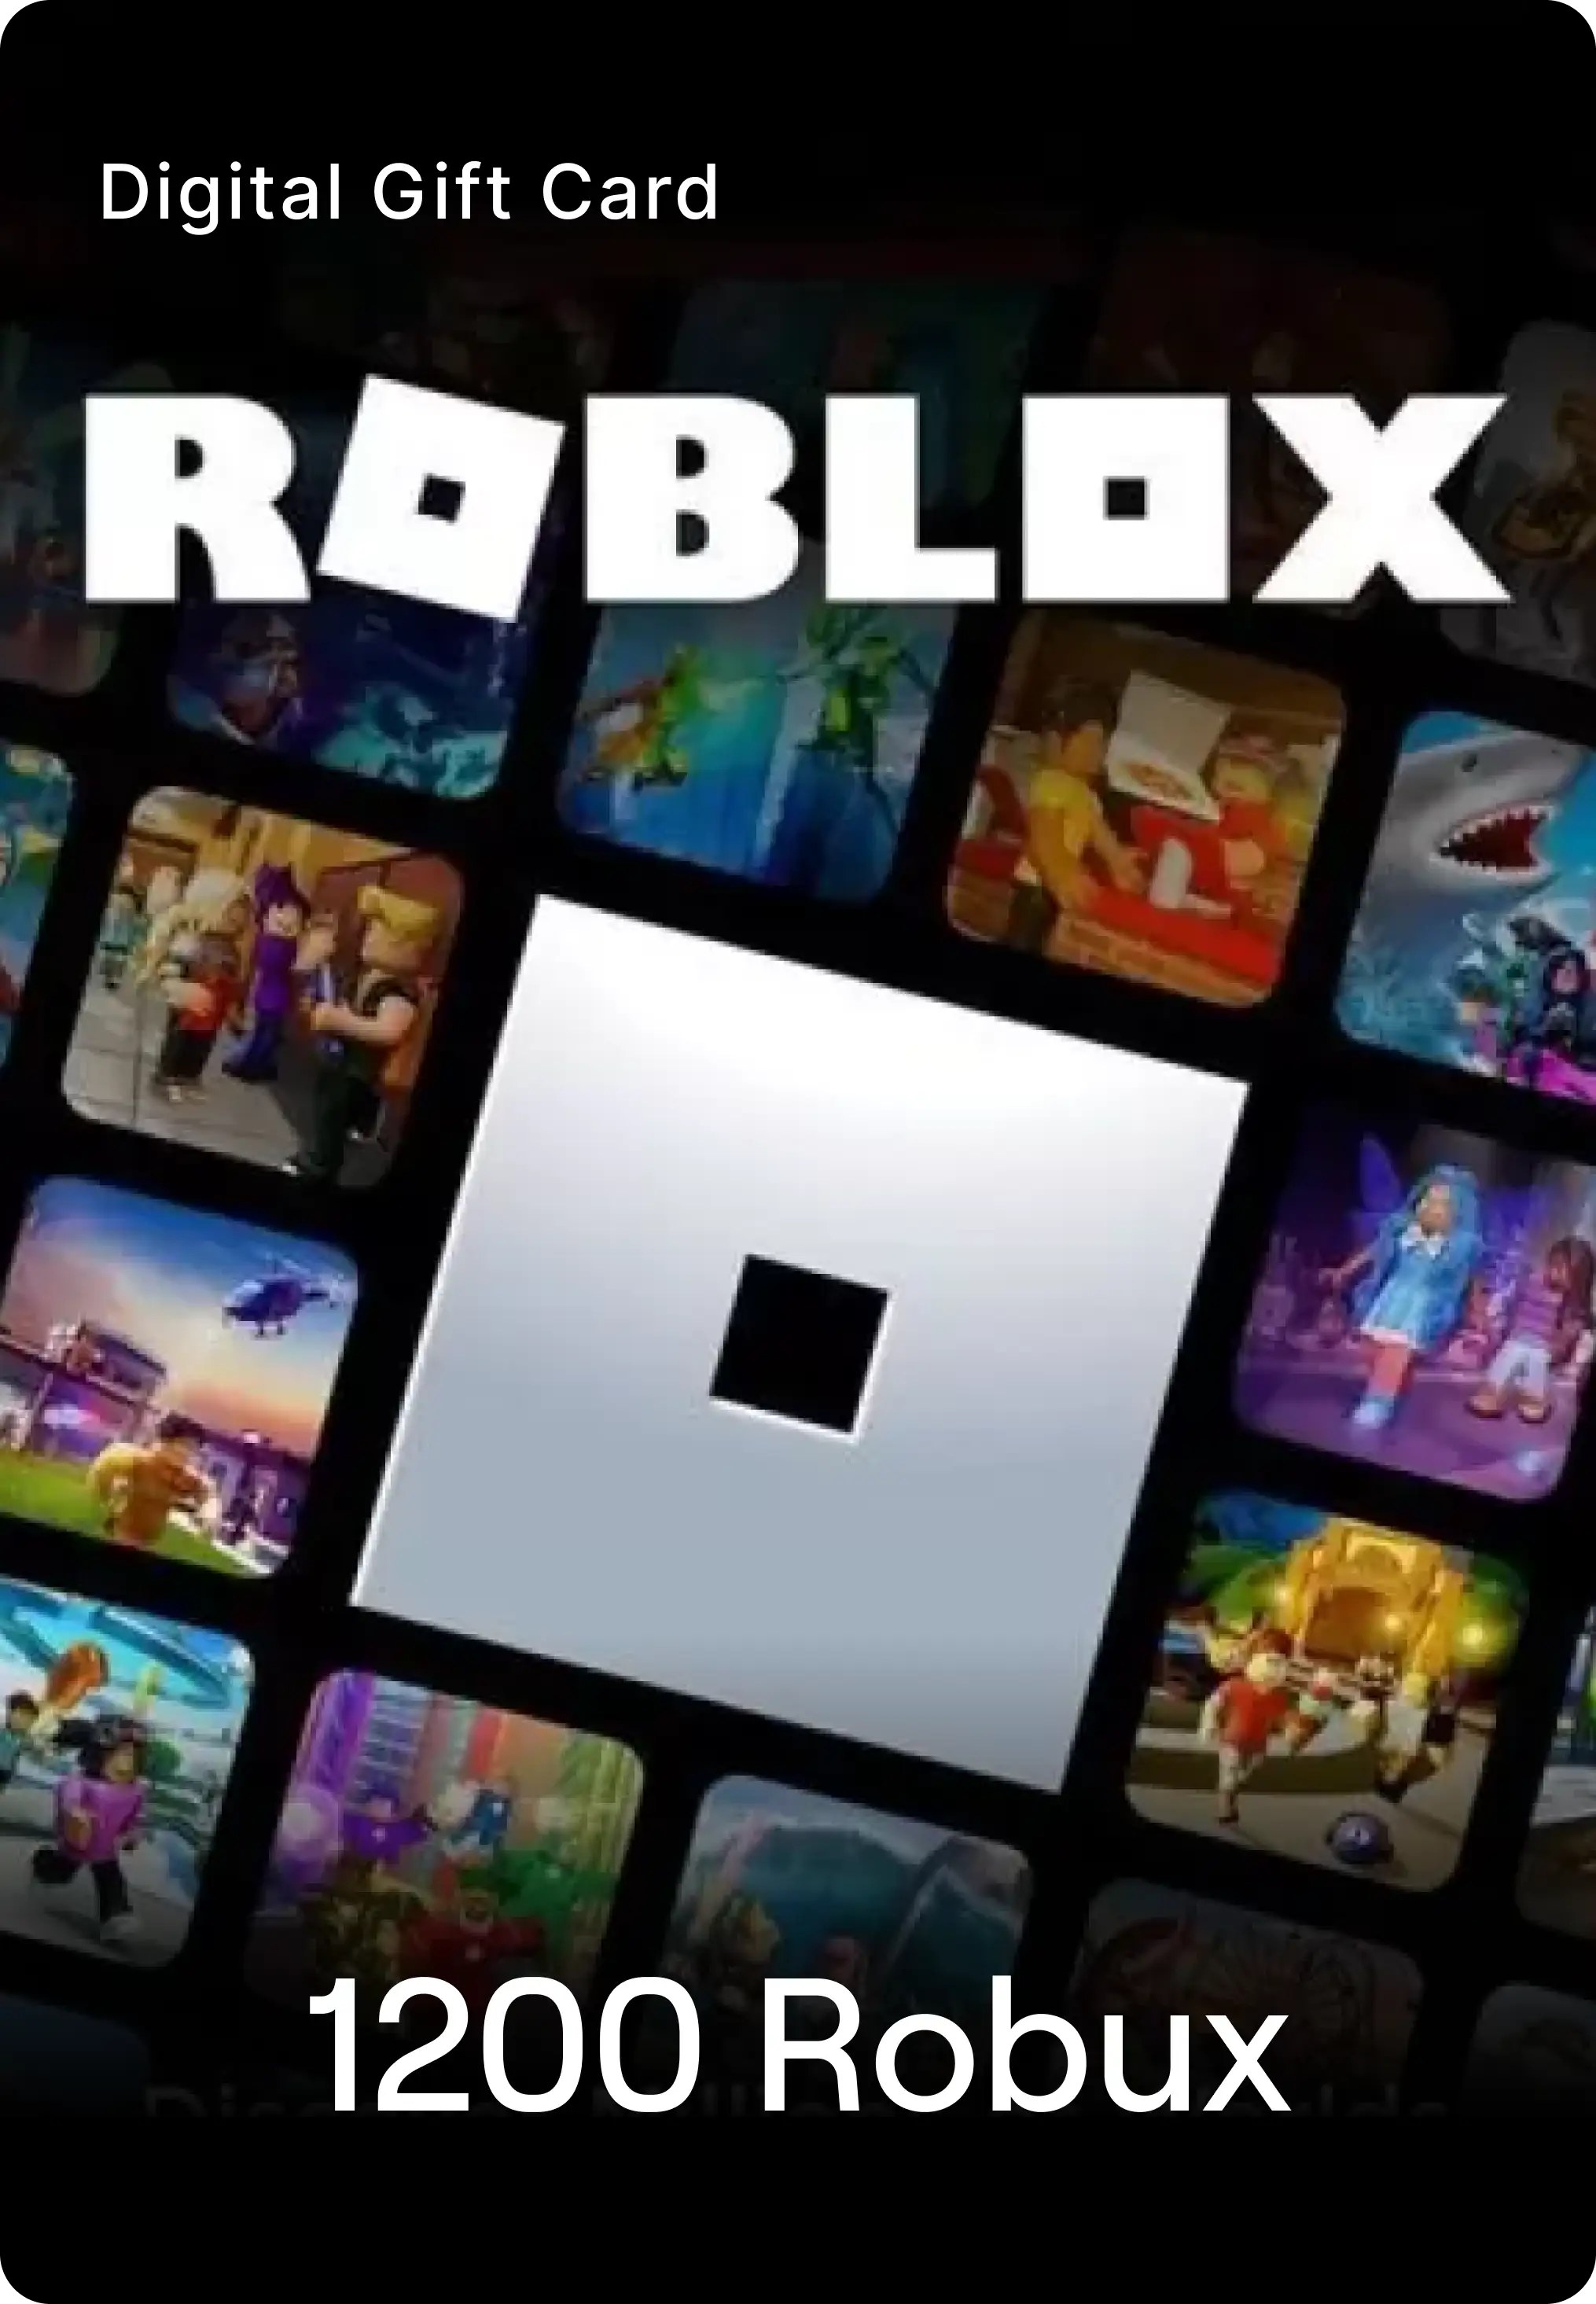 Roblox - 1200 Robux - Digital Code